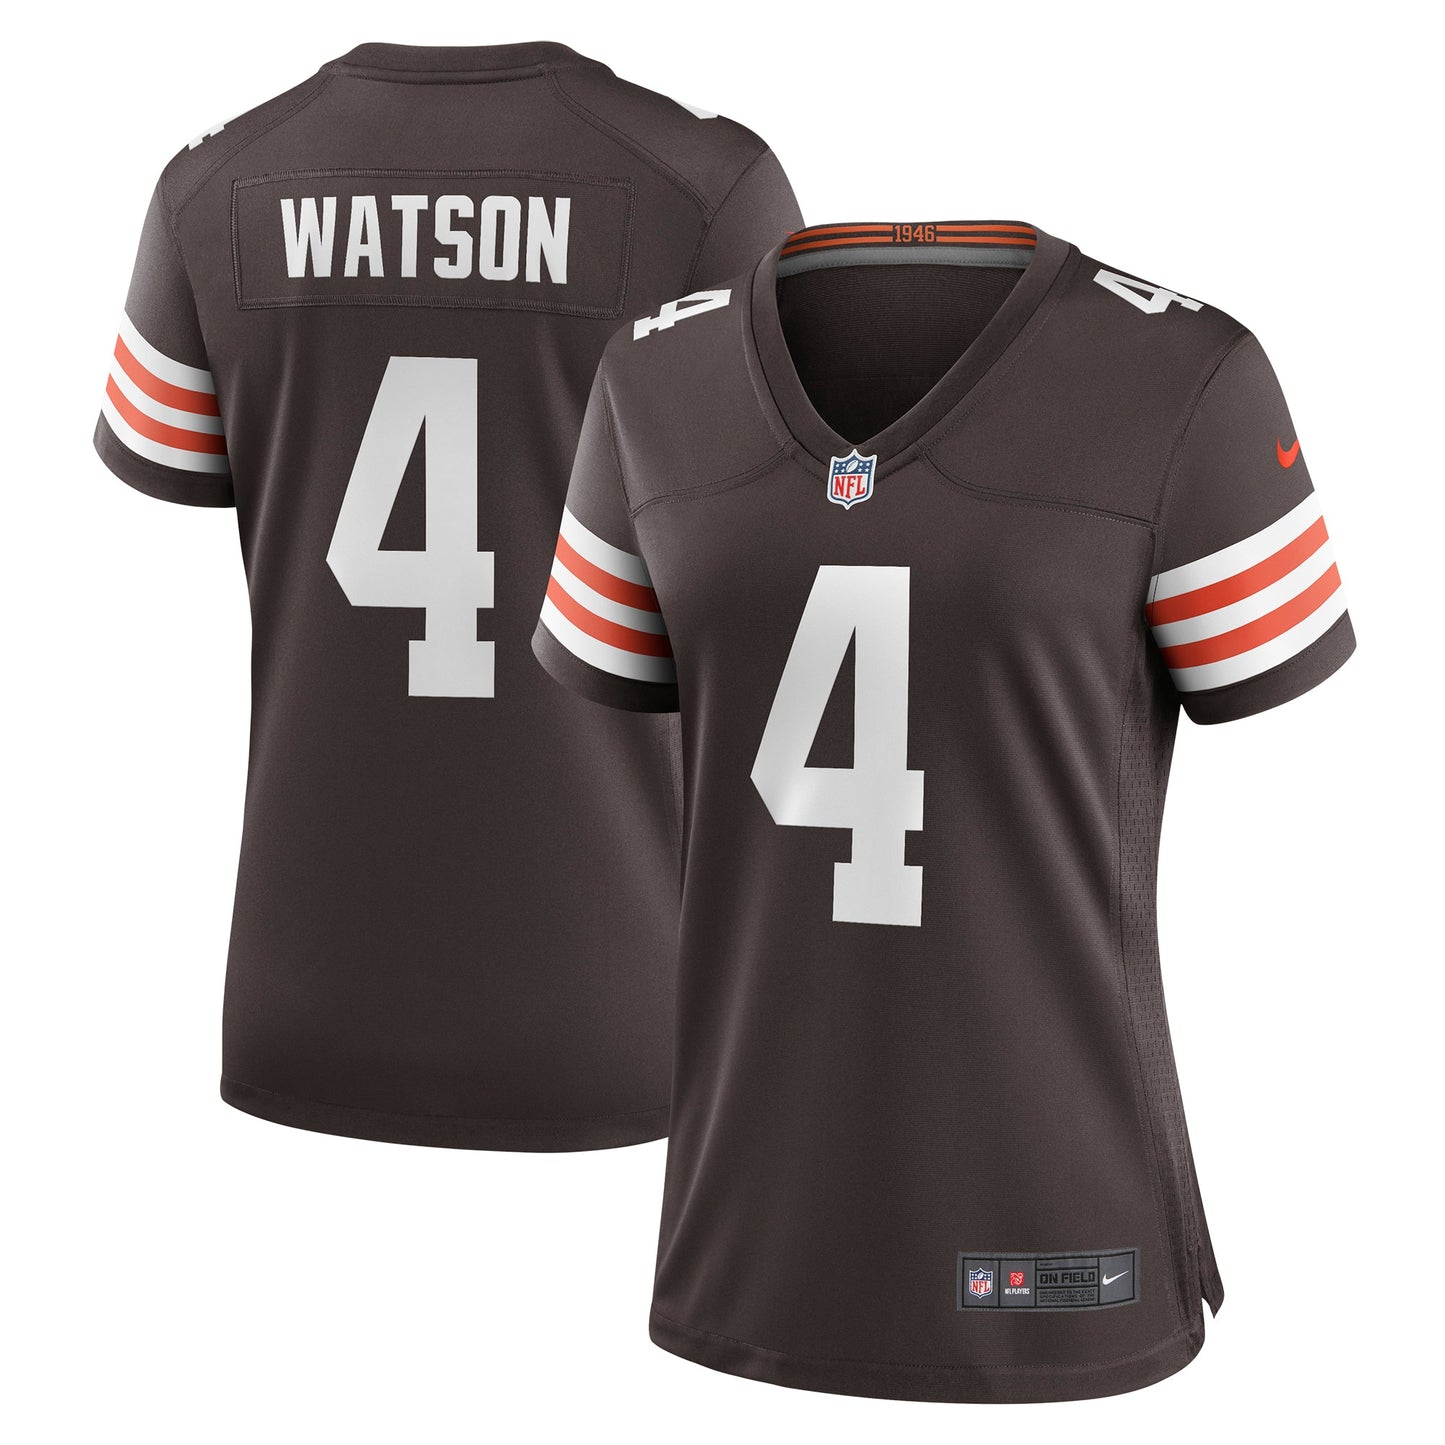 Deshaun Watson Cleveland Browns Nike Women's Player Jersey - Brown